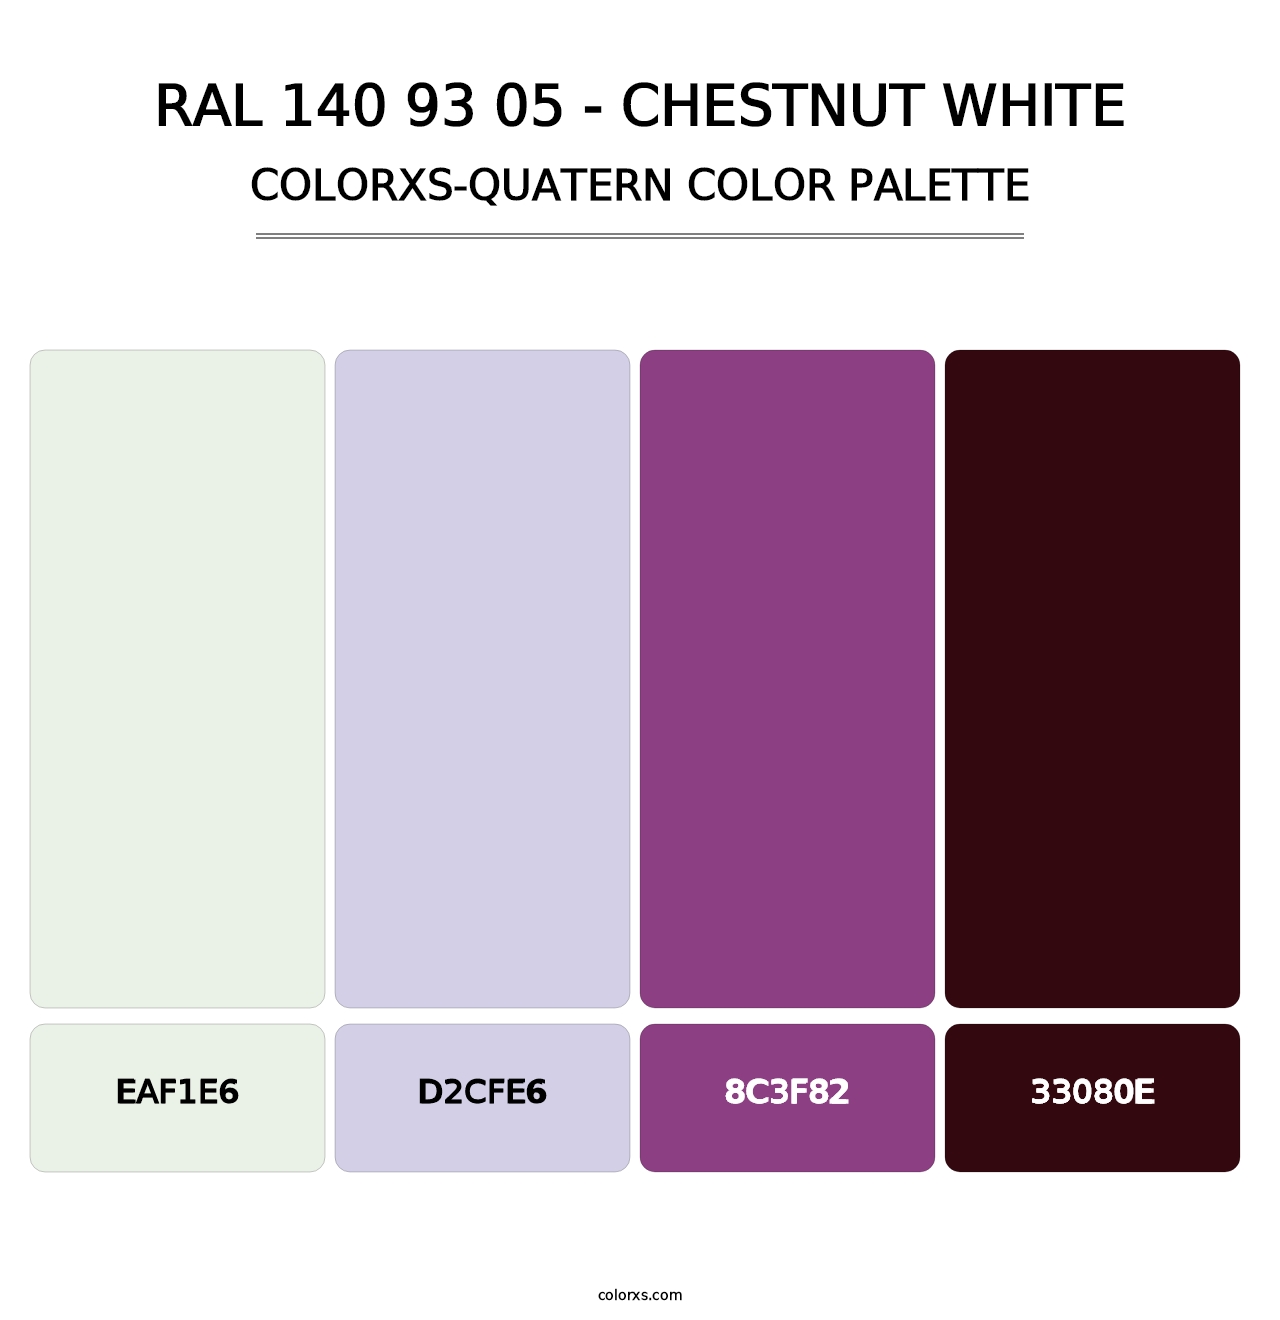 RAL 140 93 05 - Chestnut White - Colorxs Quatern Palette